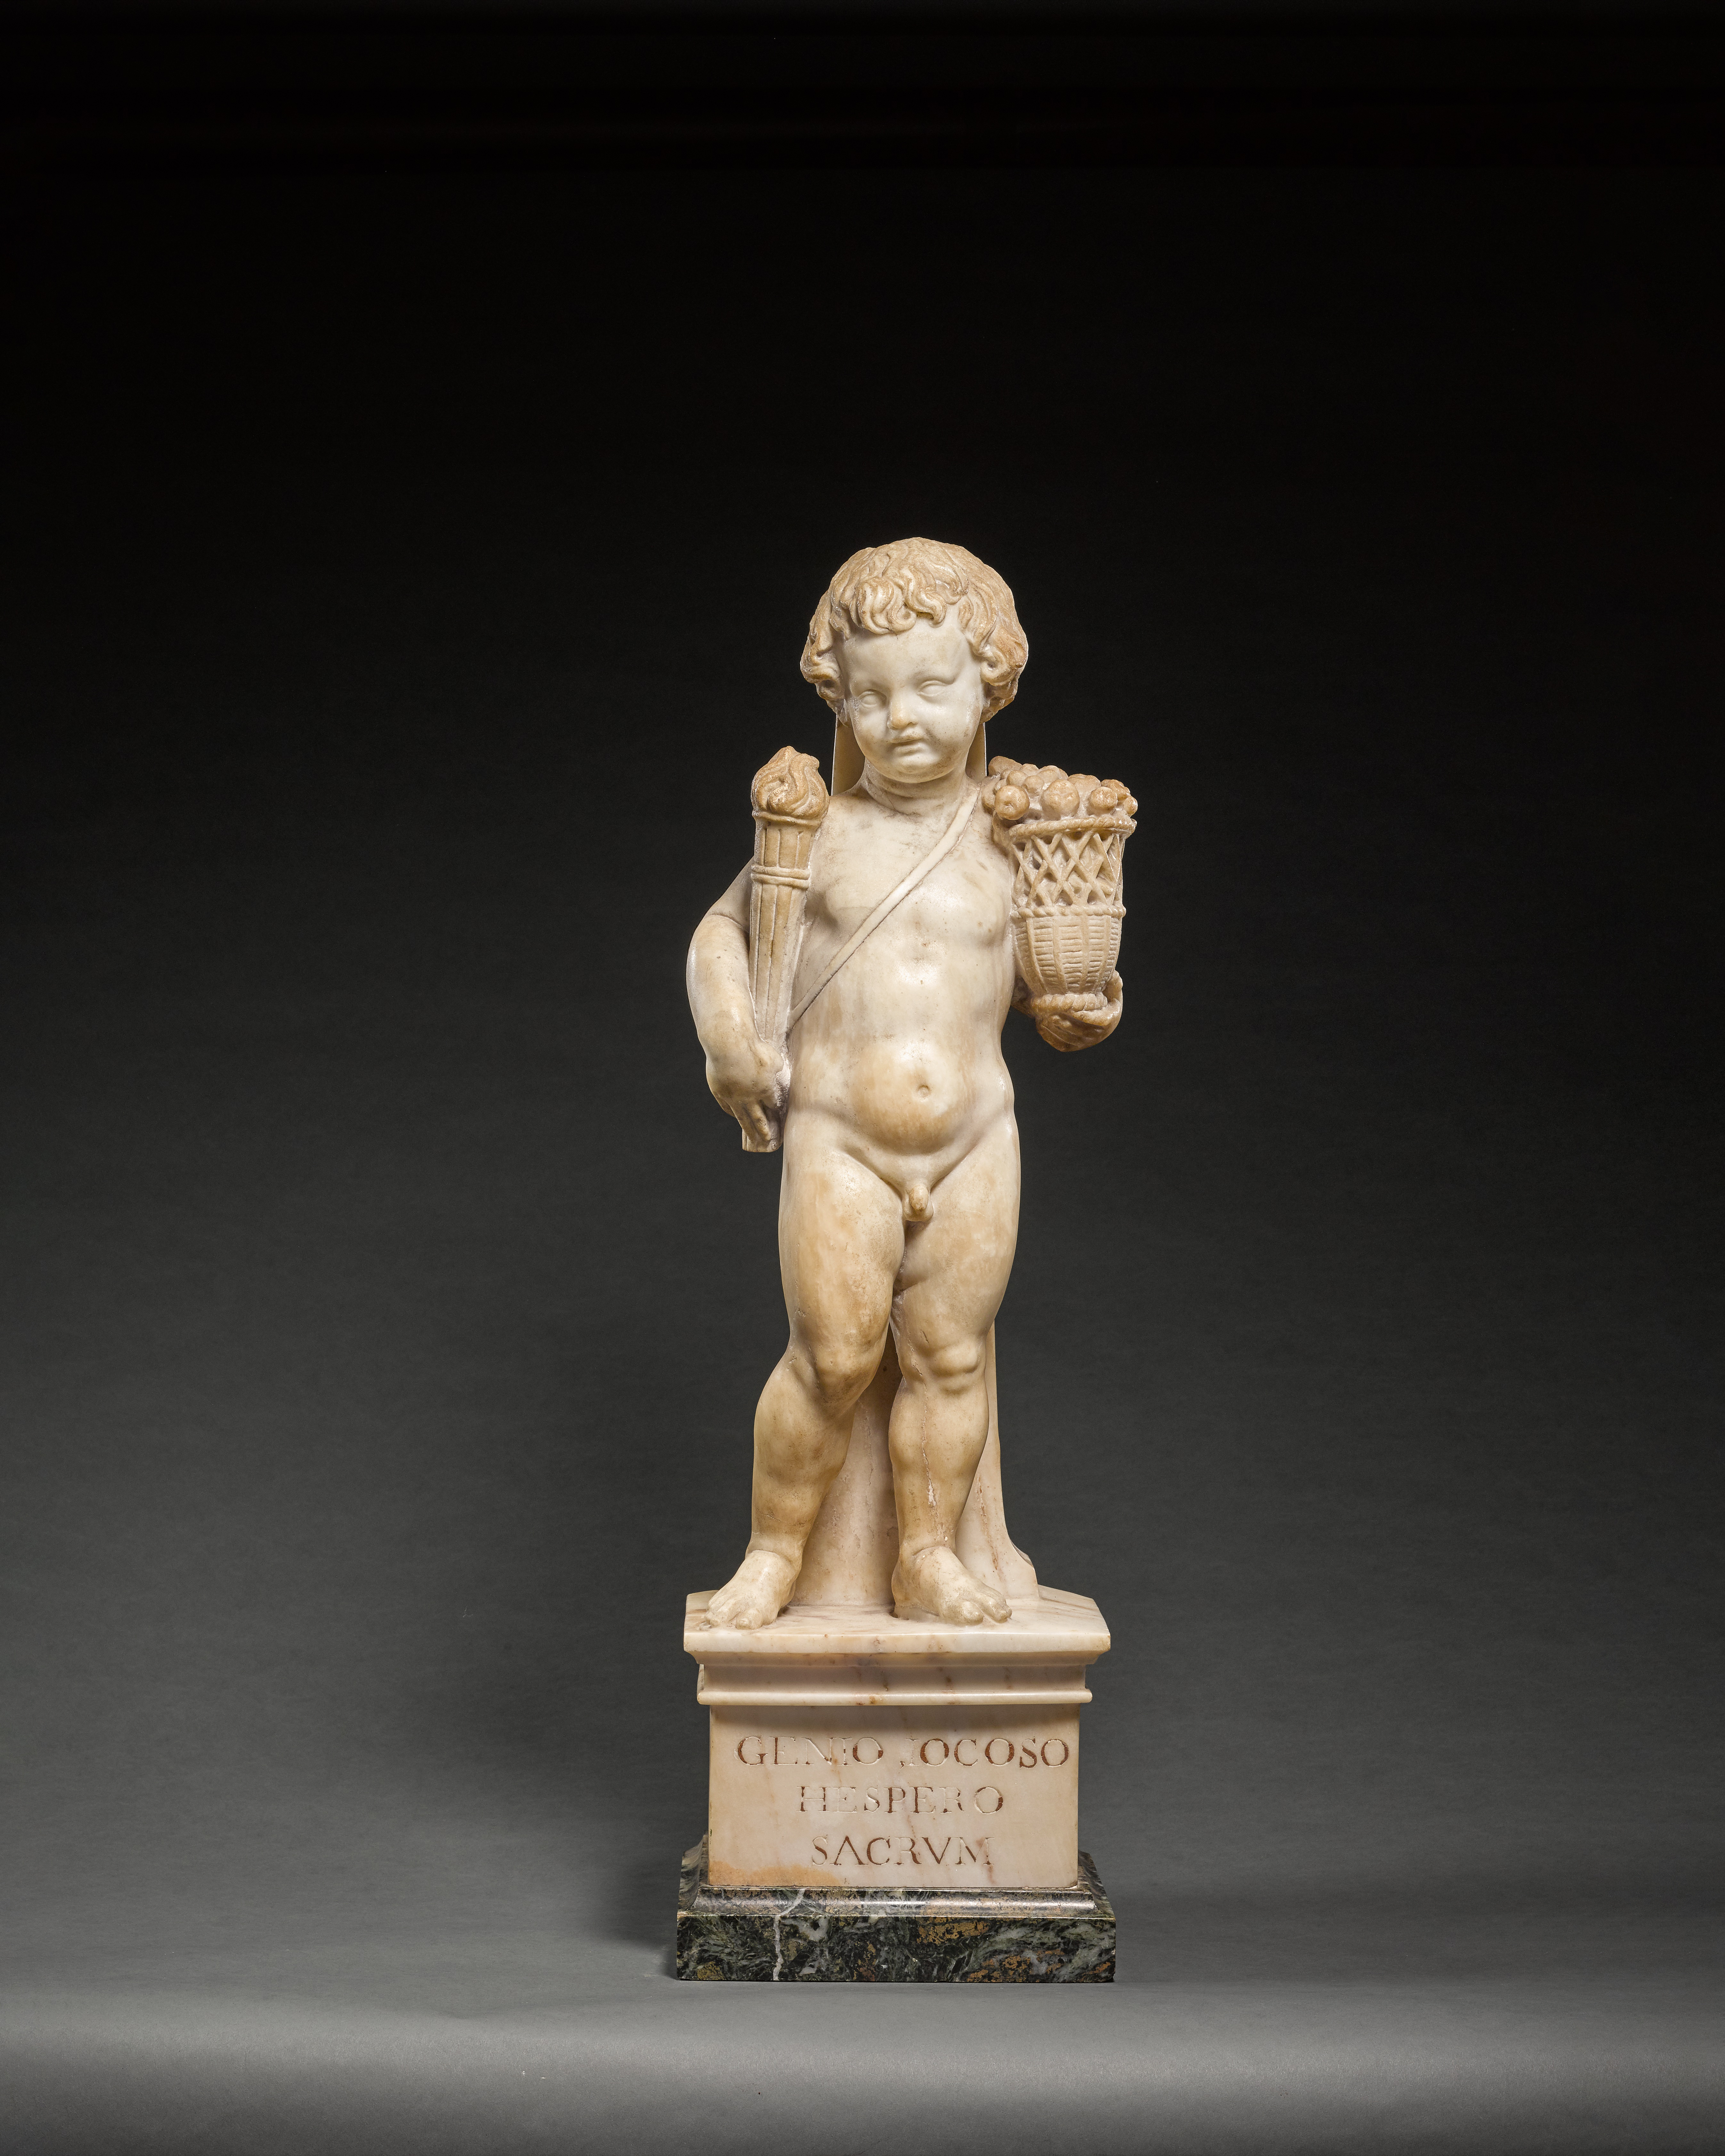 Trapzezophoros, Griekenland of Klein-Azië, 2e eeuw, marmer, Rubenshuis